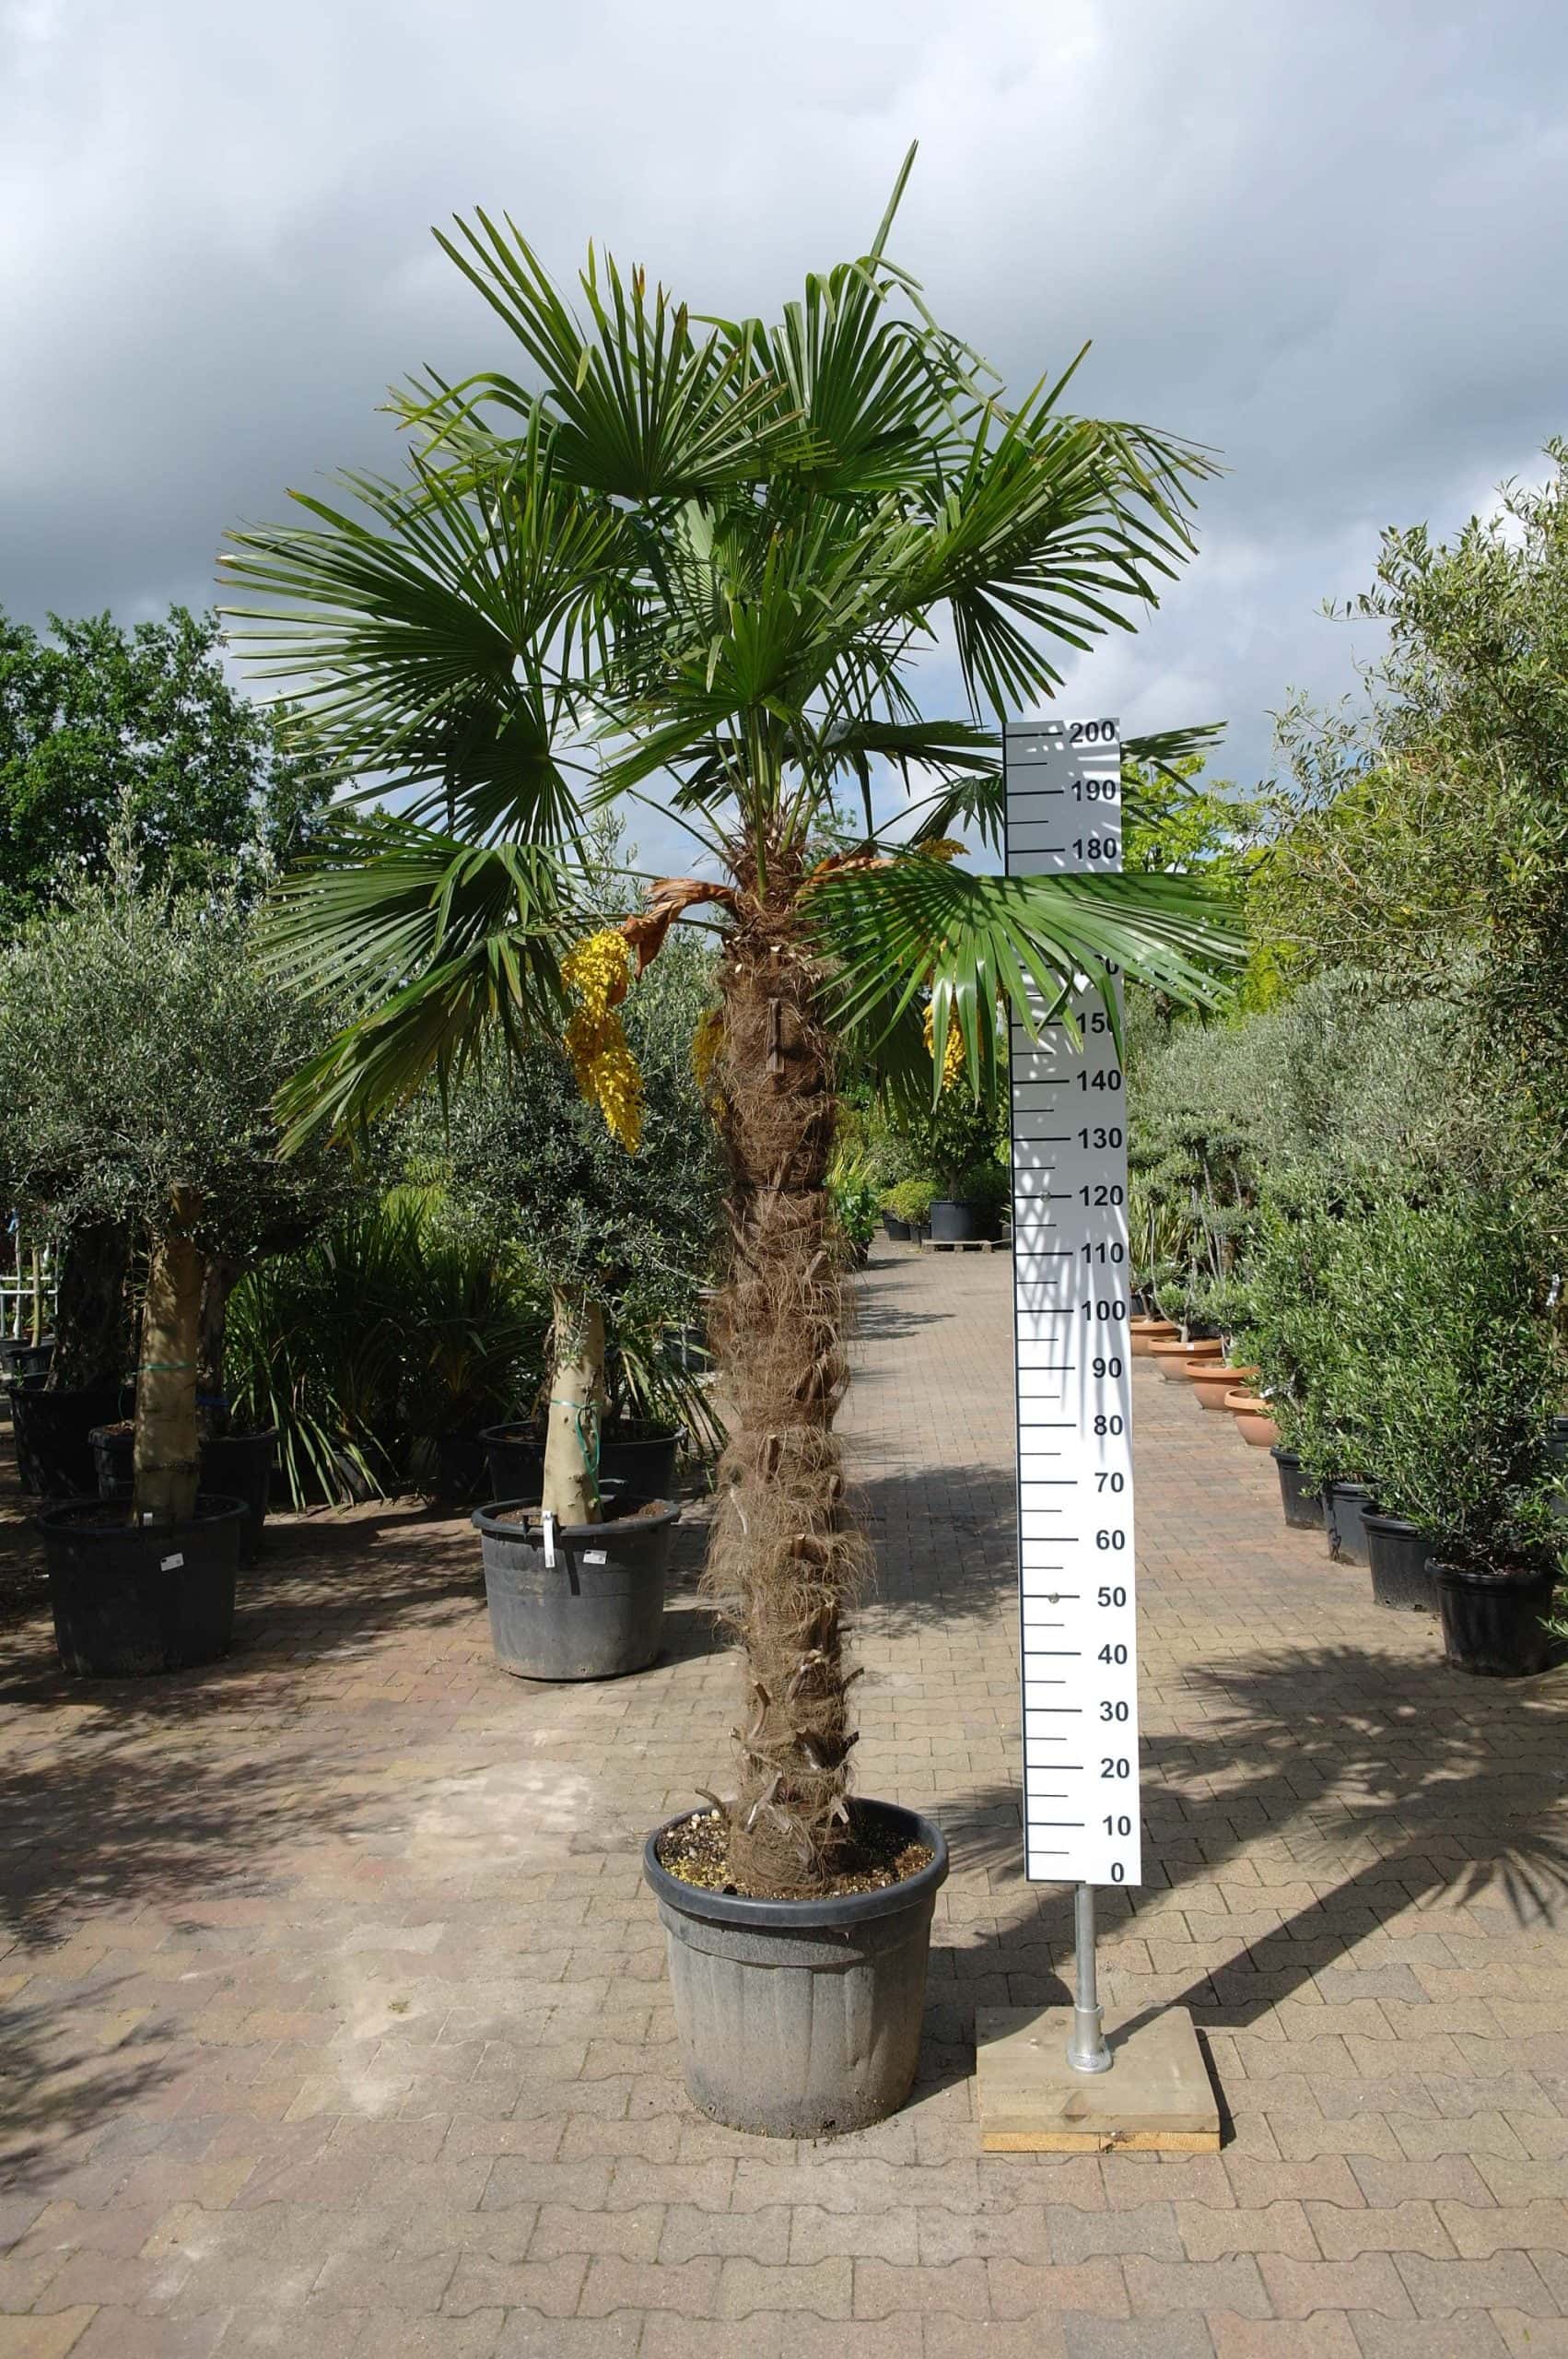 marketing Petulance glans Palmboom Trachycarpus Fortunei (stam 170 - 180 cm) - Goedkopeolijfbomen.nl